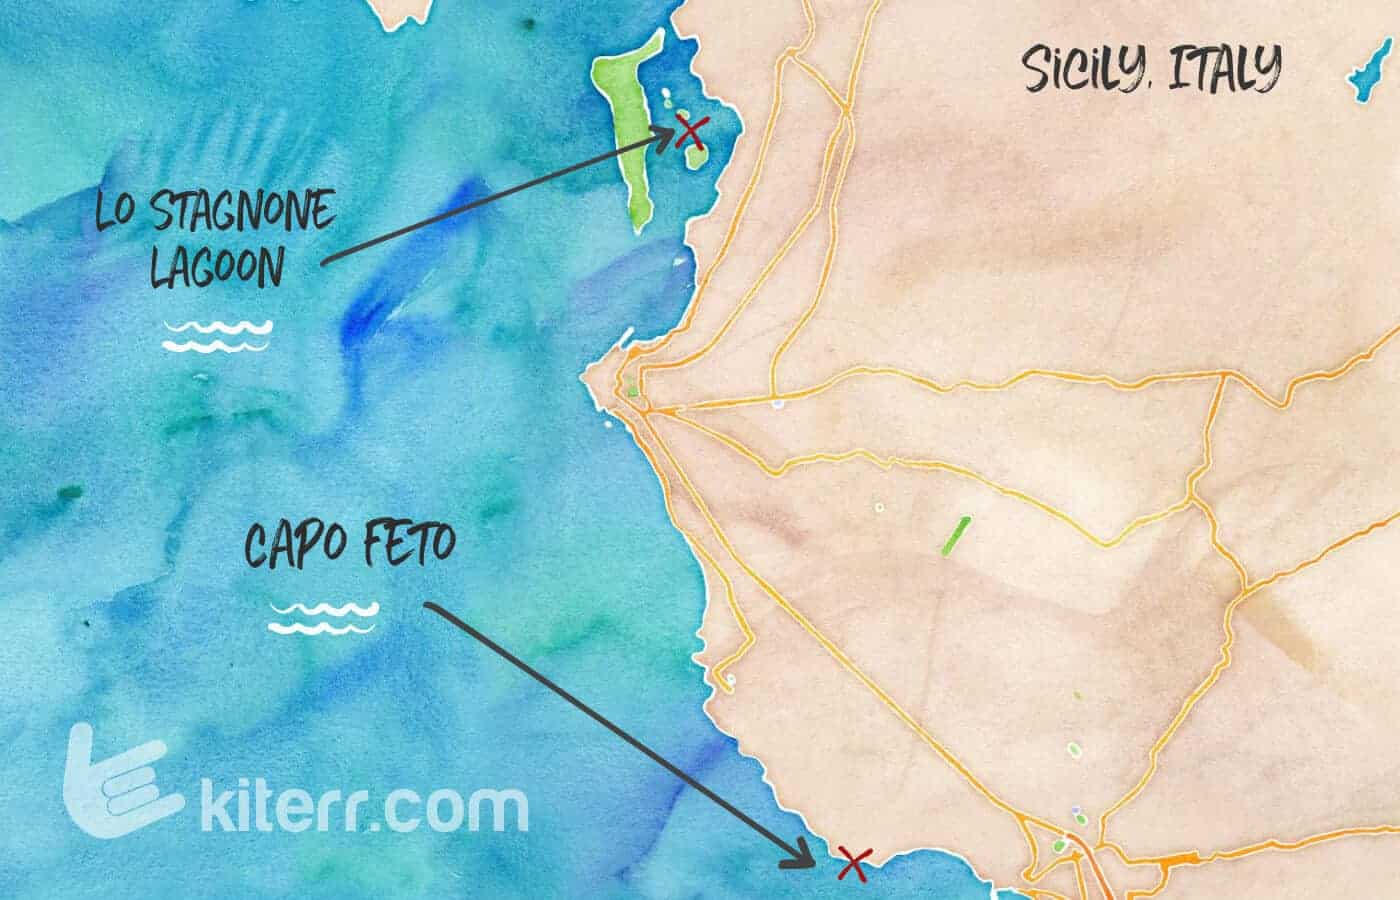 Kitesurfing in Sicily, Italy - Capo Feto // Kiterr.com